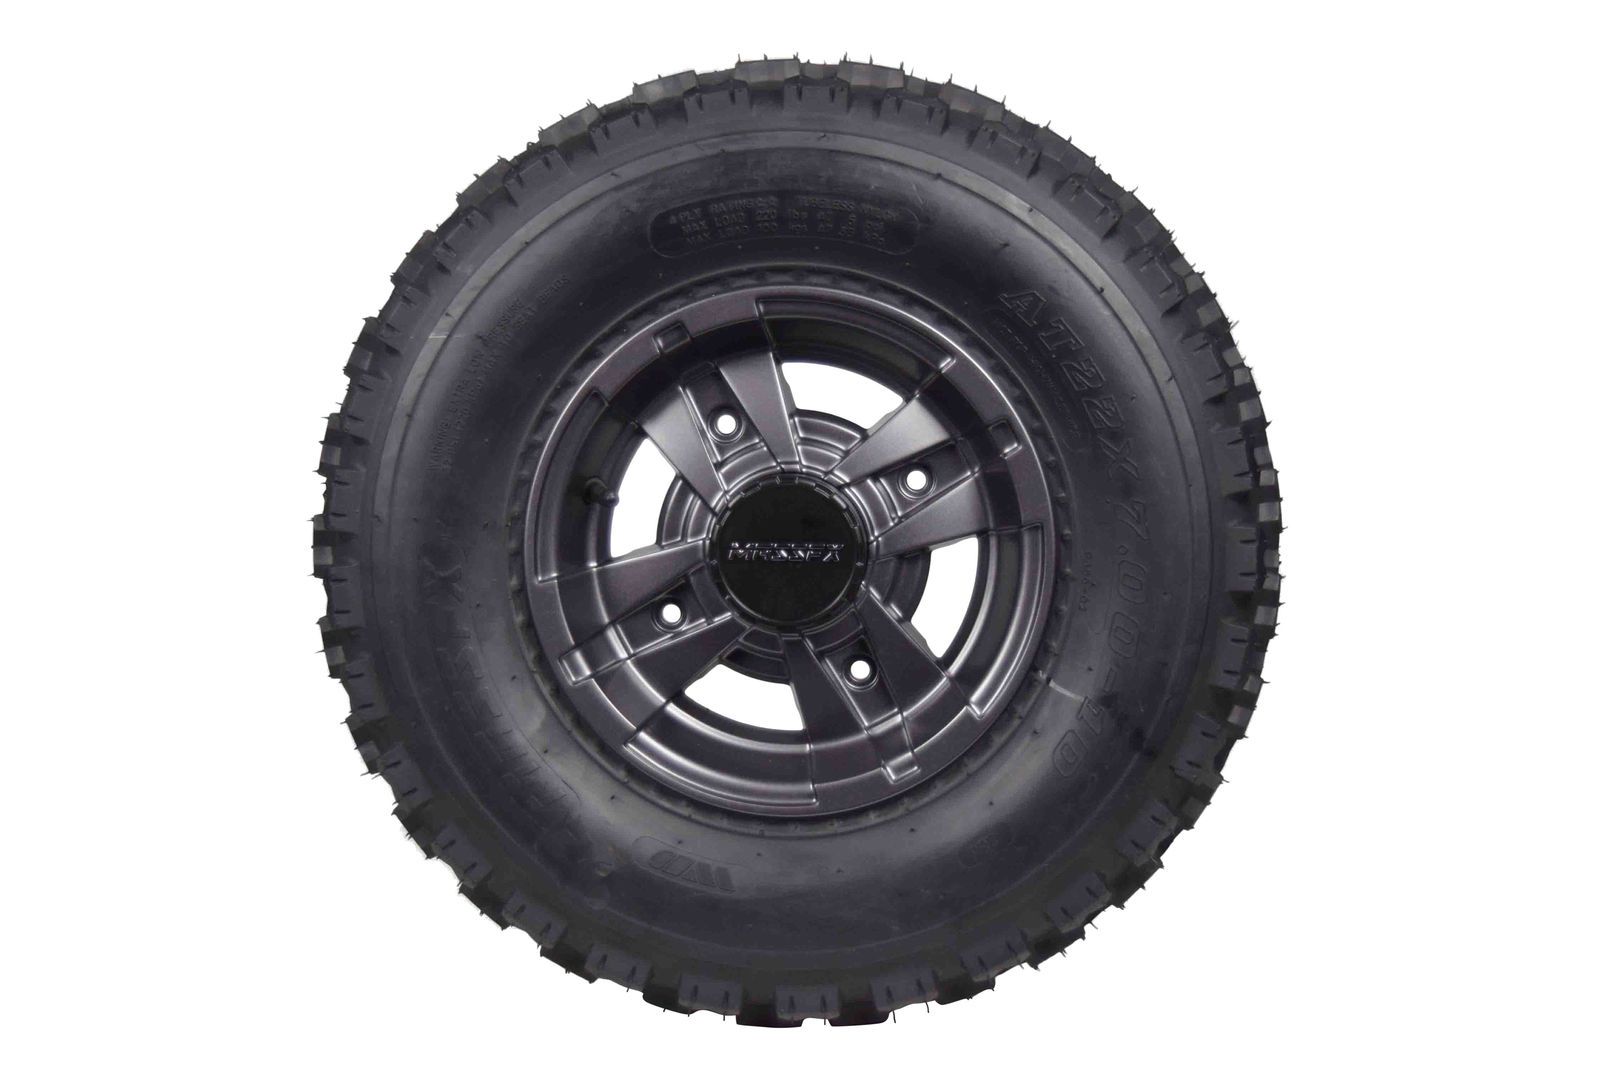 MASSFX 22x7-10 ATV Front Tire & 10x5 4/156 Gun Metal Wheel Kit 22x7x10 (2 Pack)